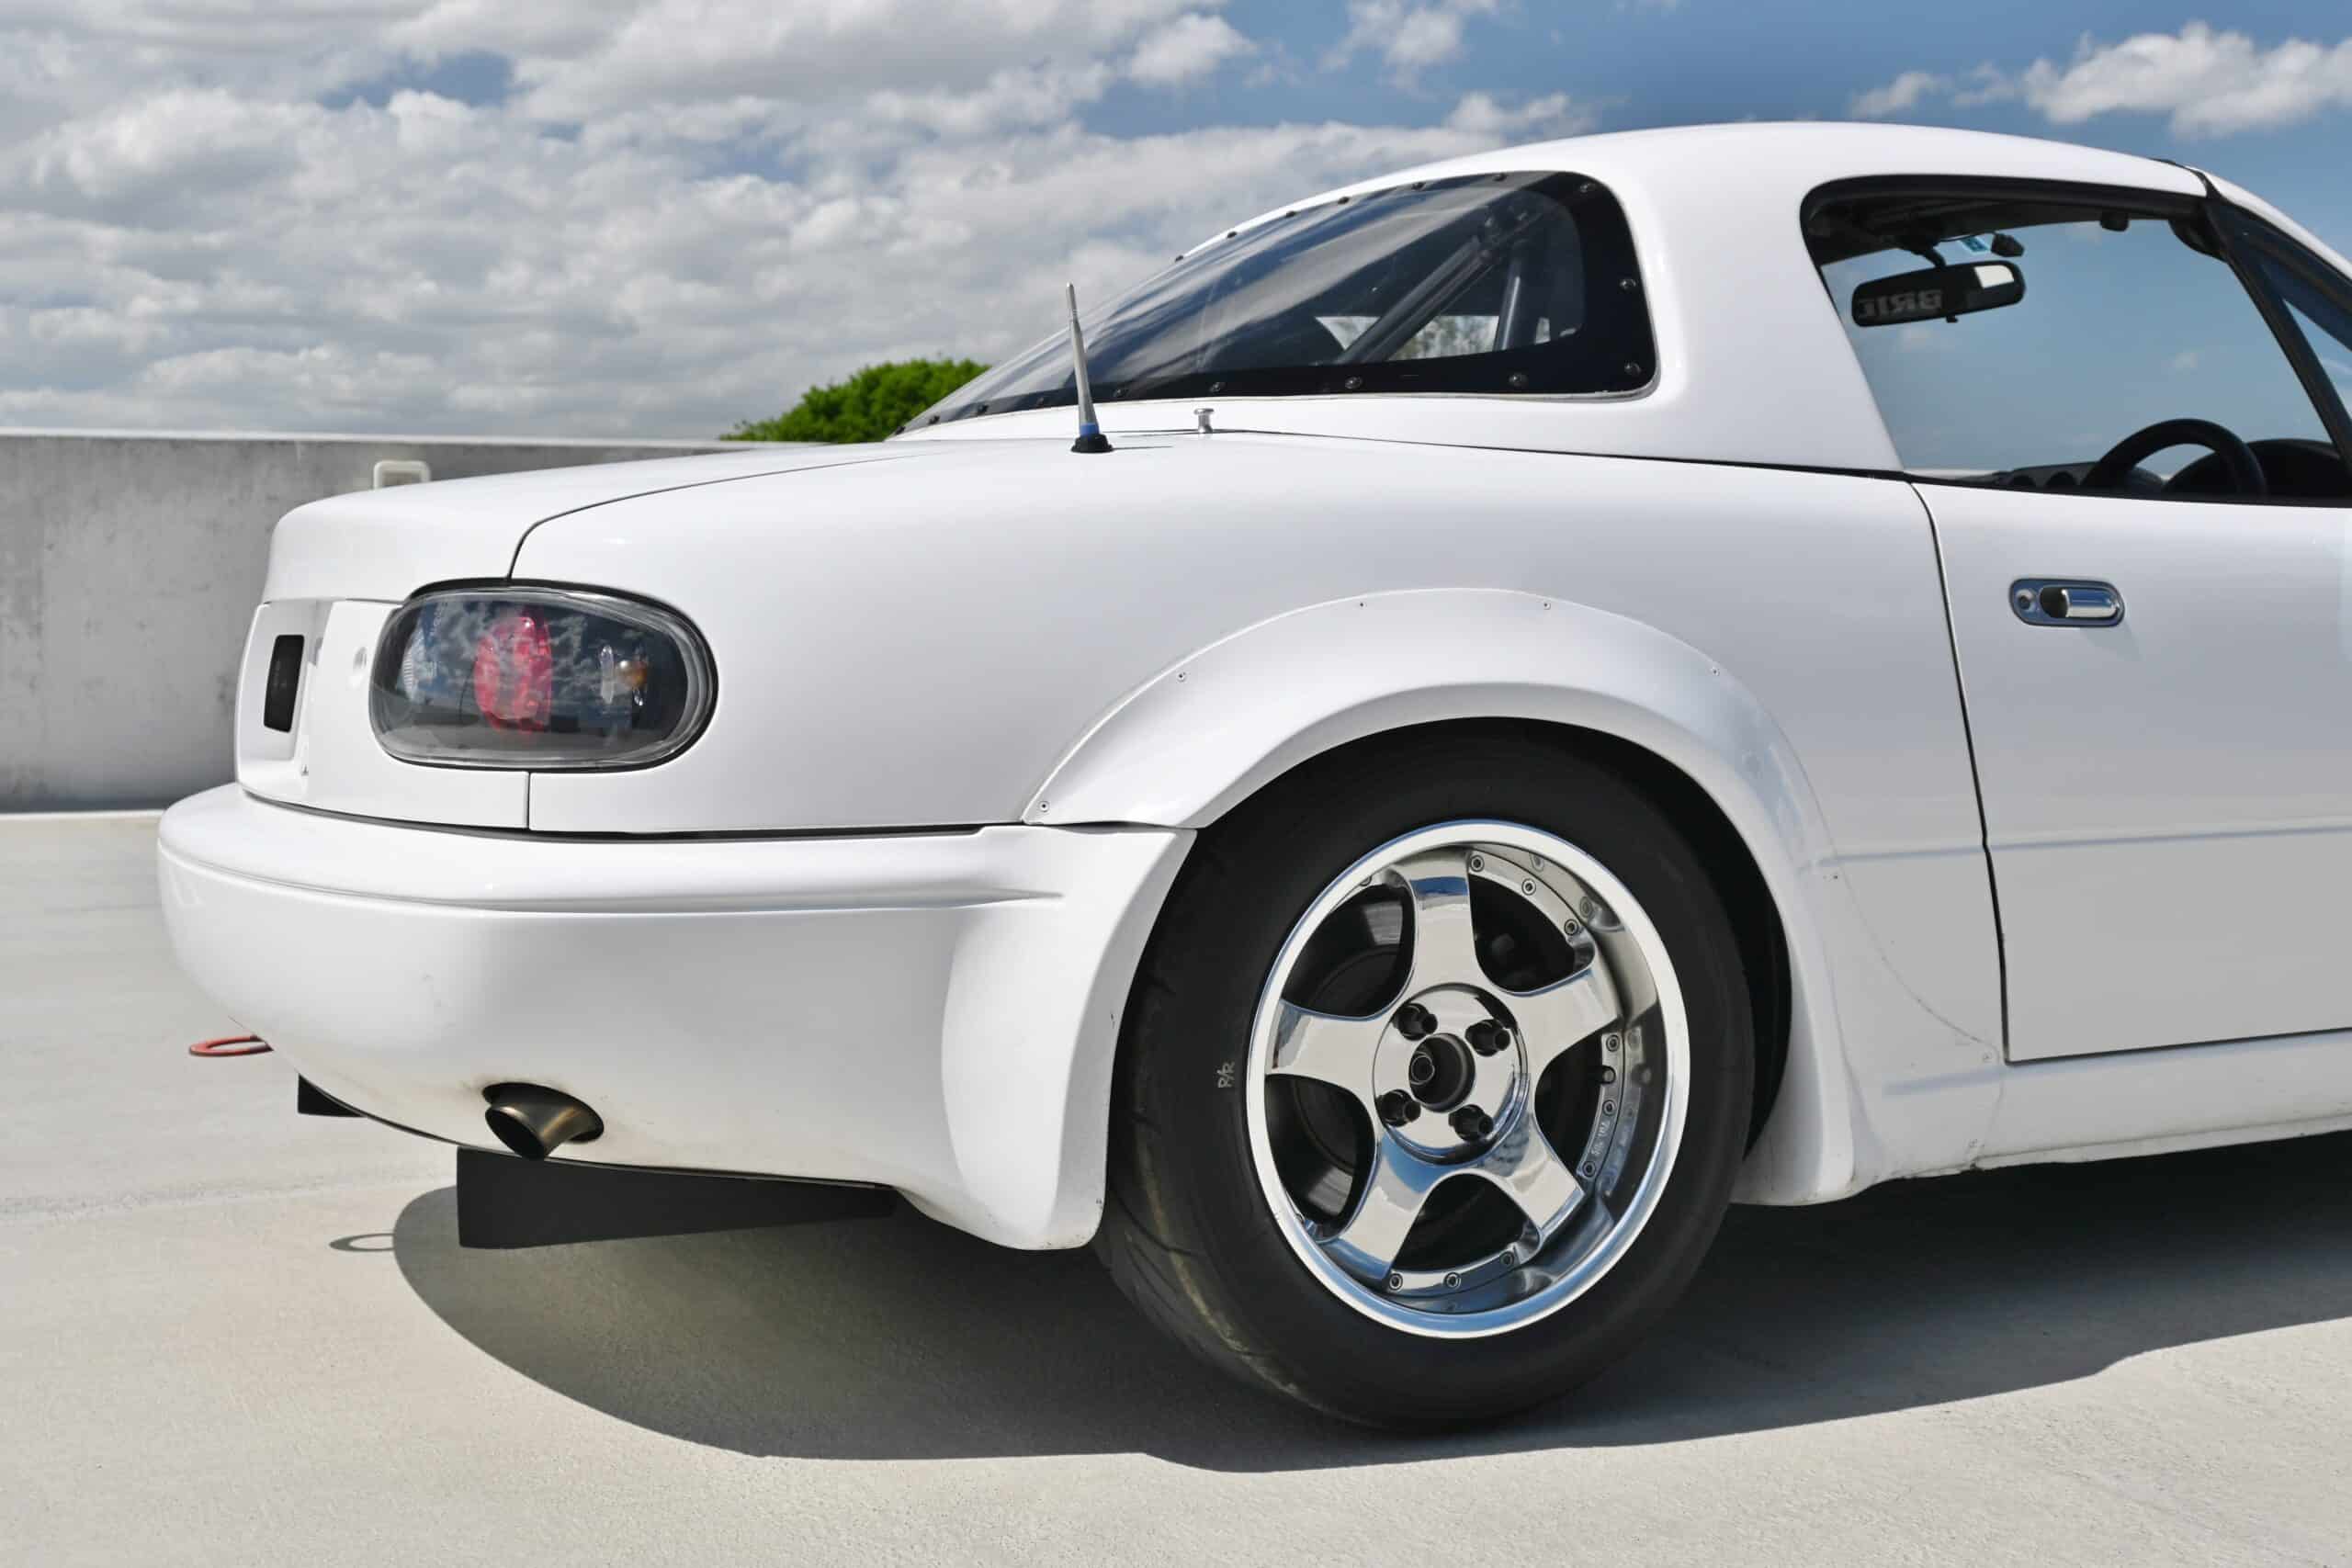 1994 Mazda MX-5 Miata Eunos Roadster JDM Widebody -Balanced and Blueprinted Motor – ITBs/ Cams Hi Compression Pistons